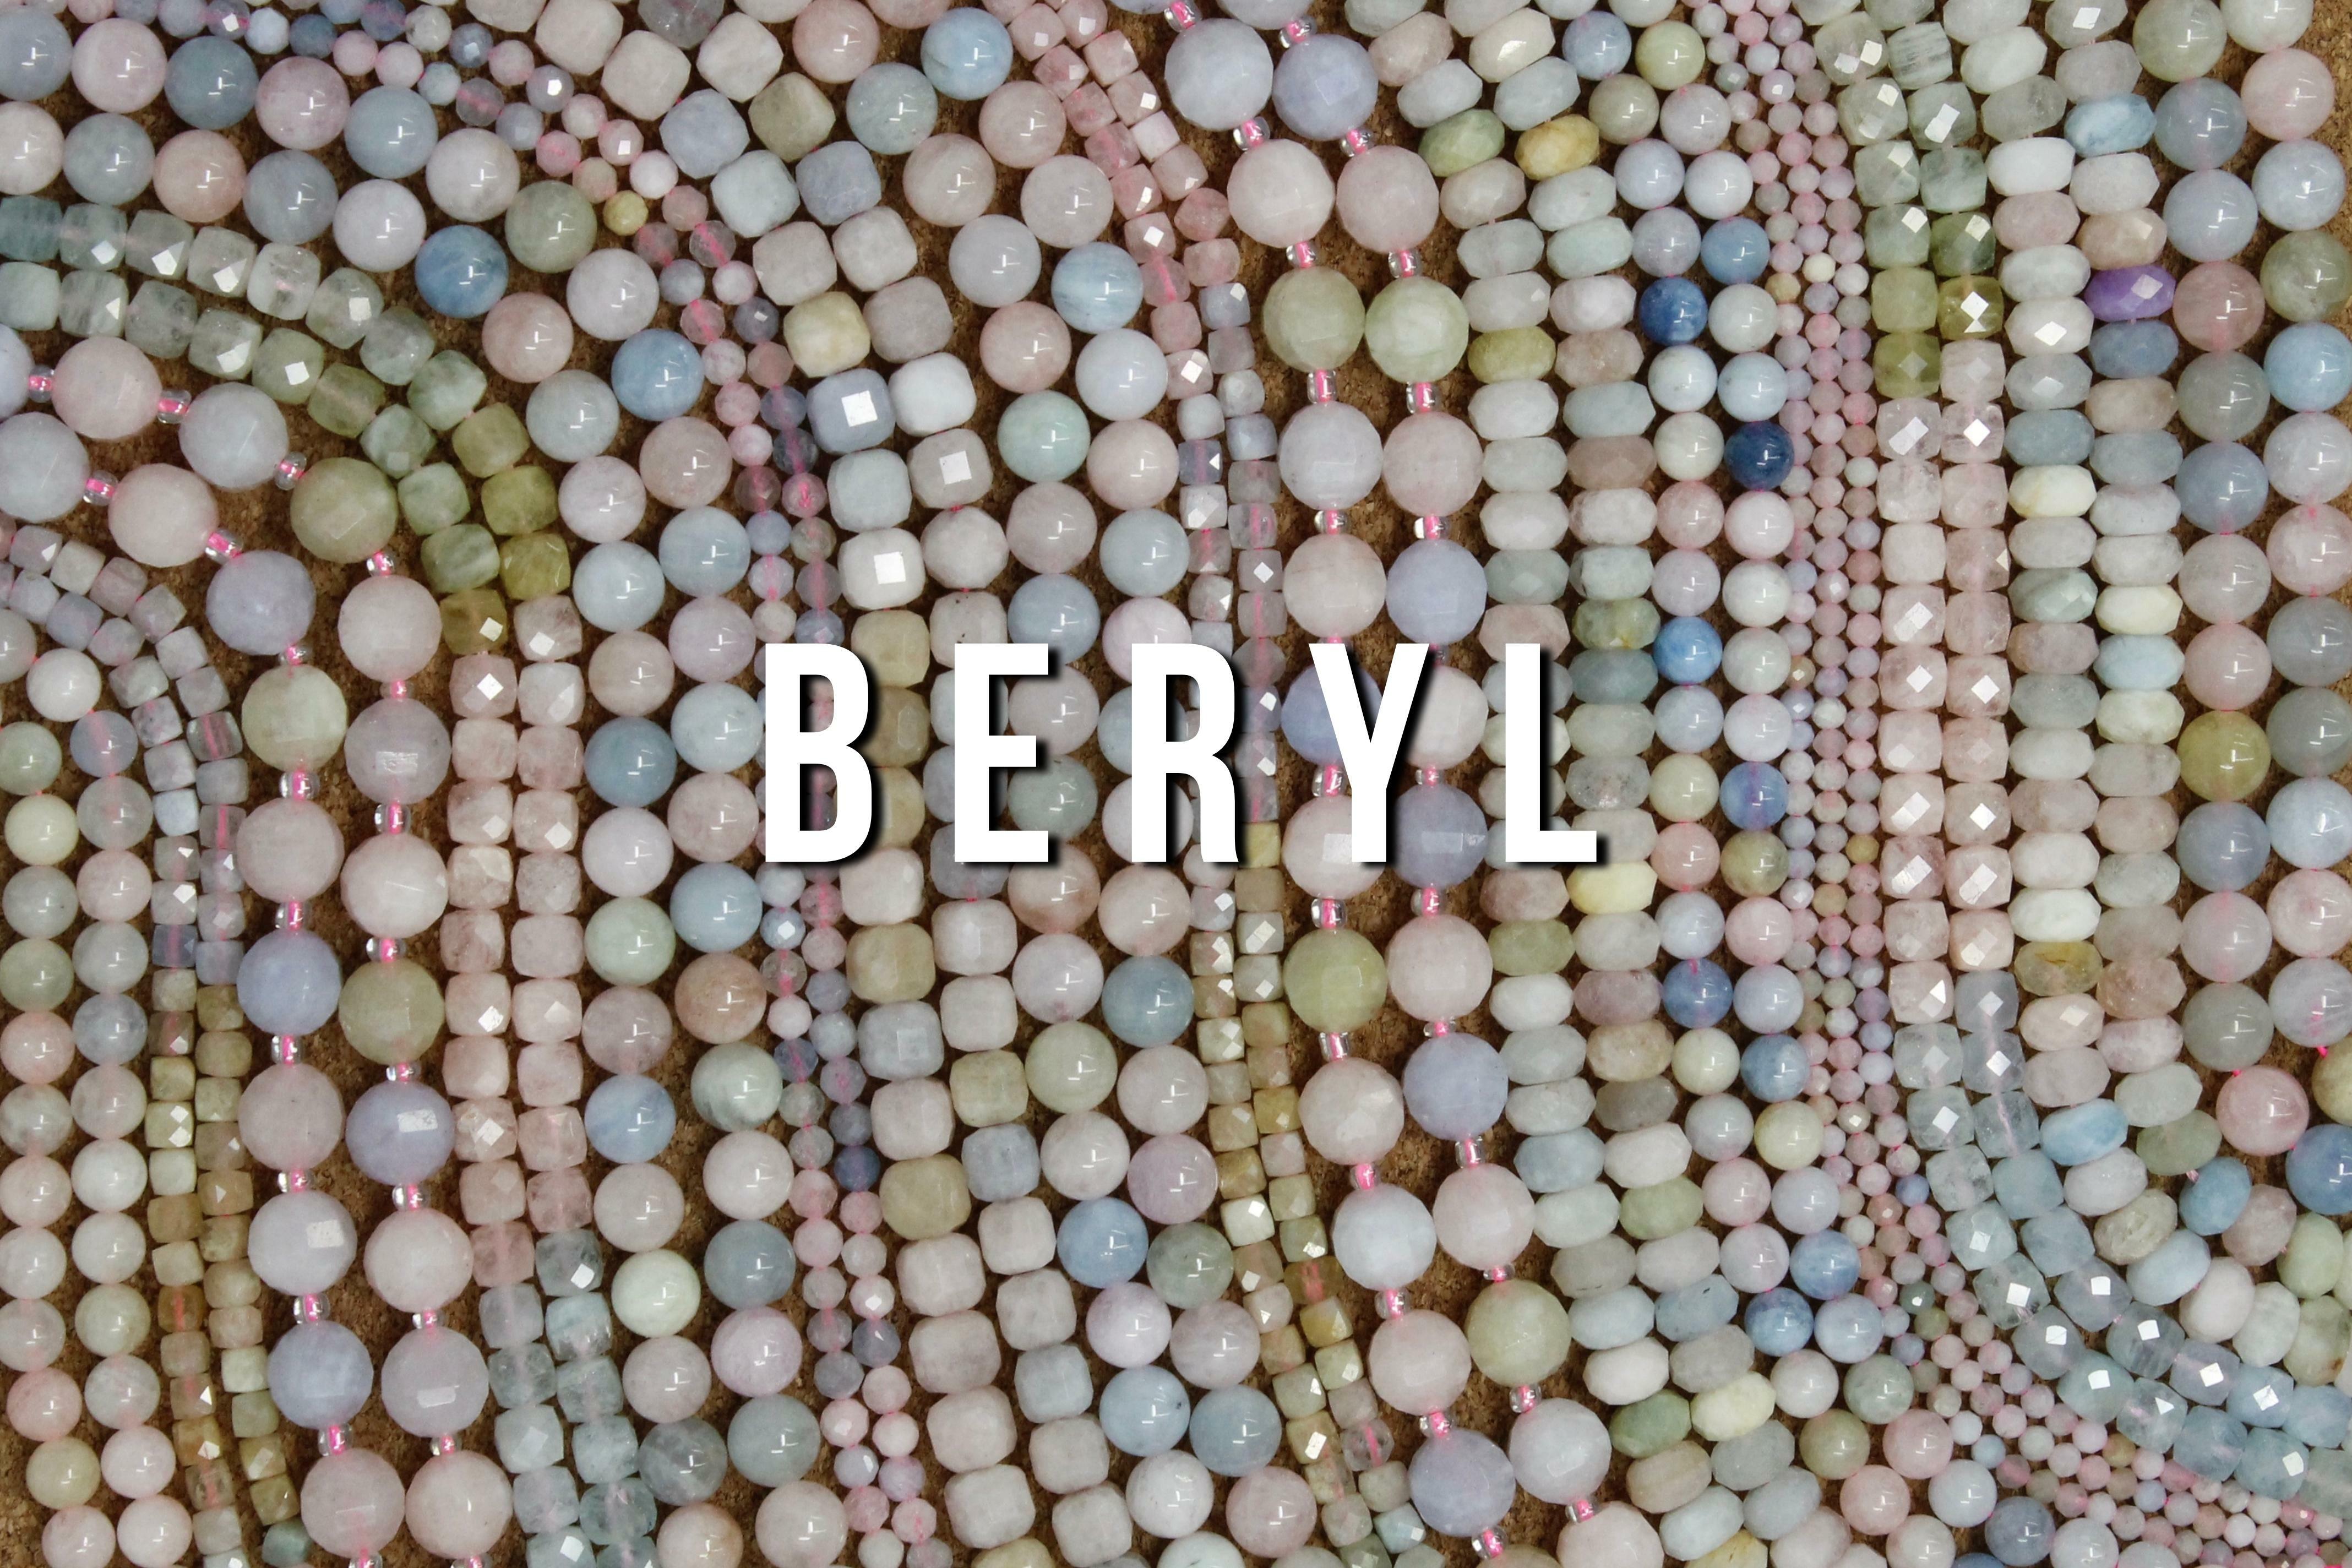 Multicolor Beryl Elastic Bracelet - 6mm Beads